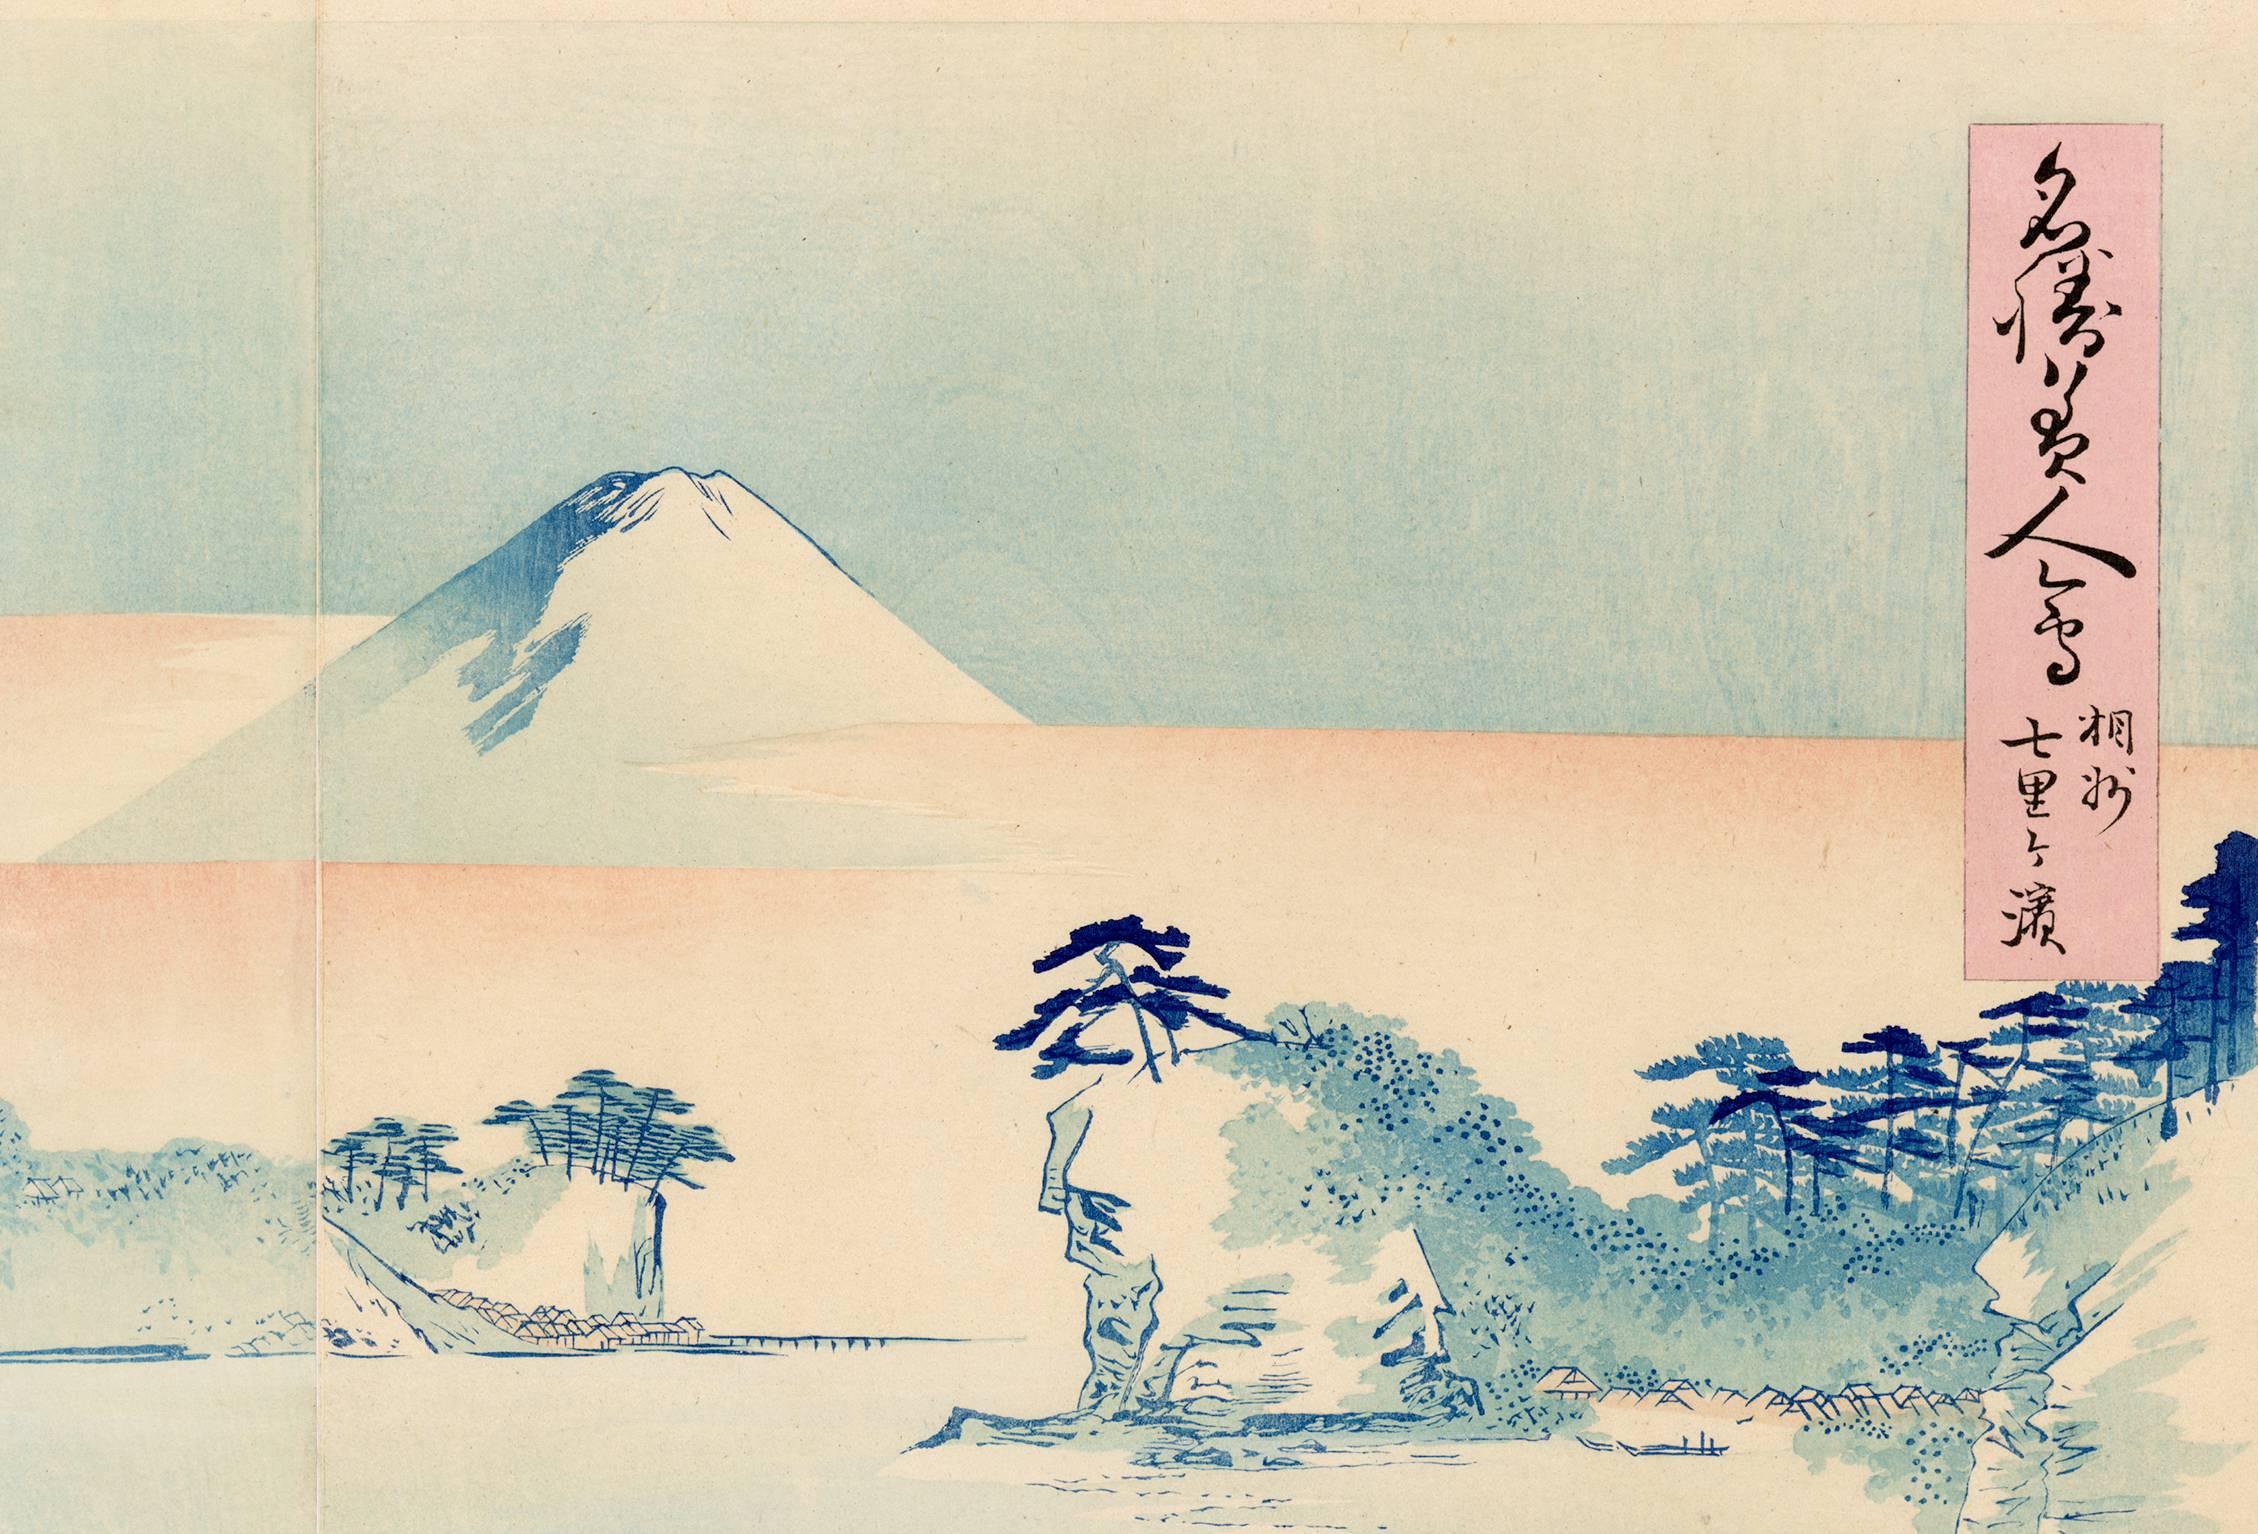 Beauties am Strand mit Blick auf den Berg Fuji (Beige), Figurative Print, von CHIKANOBU, Yoshu